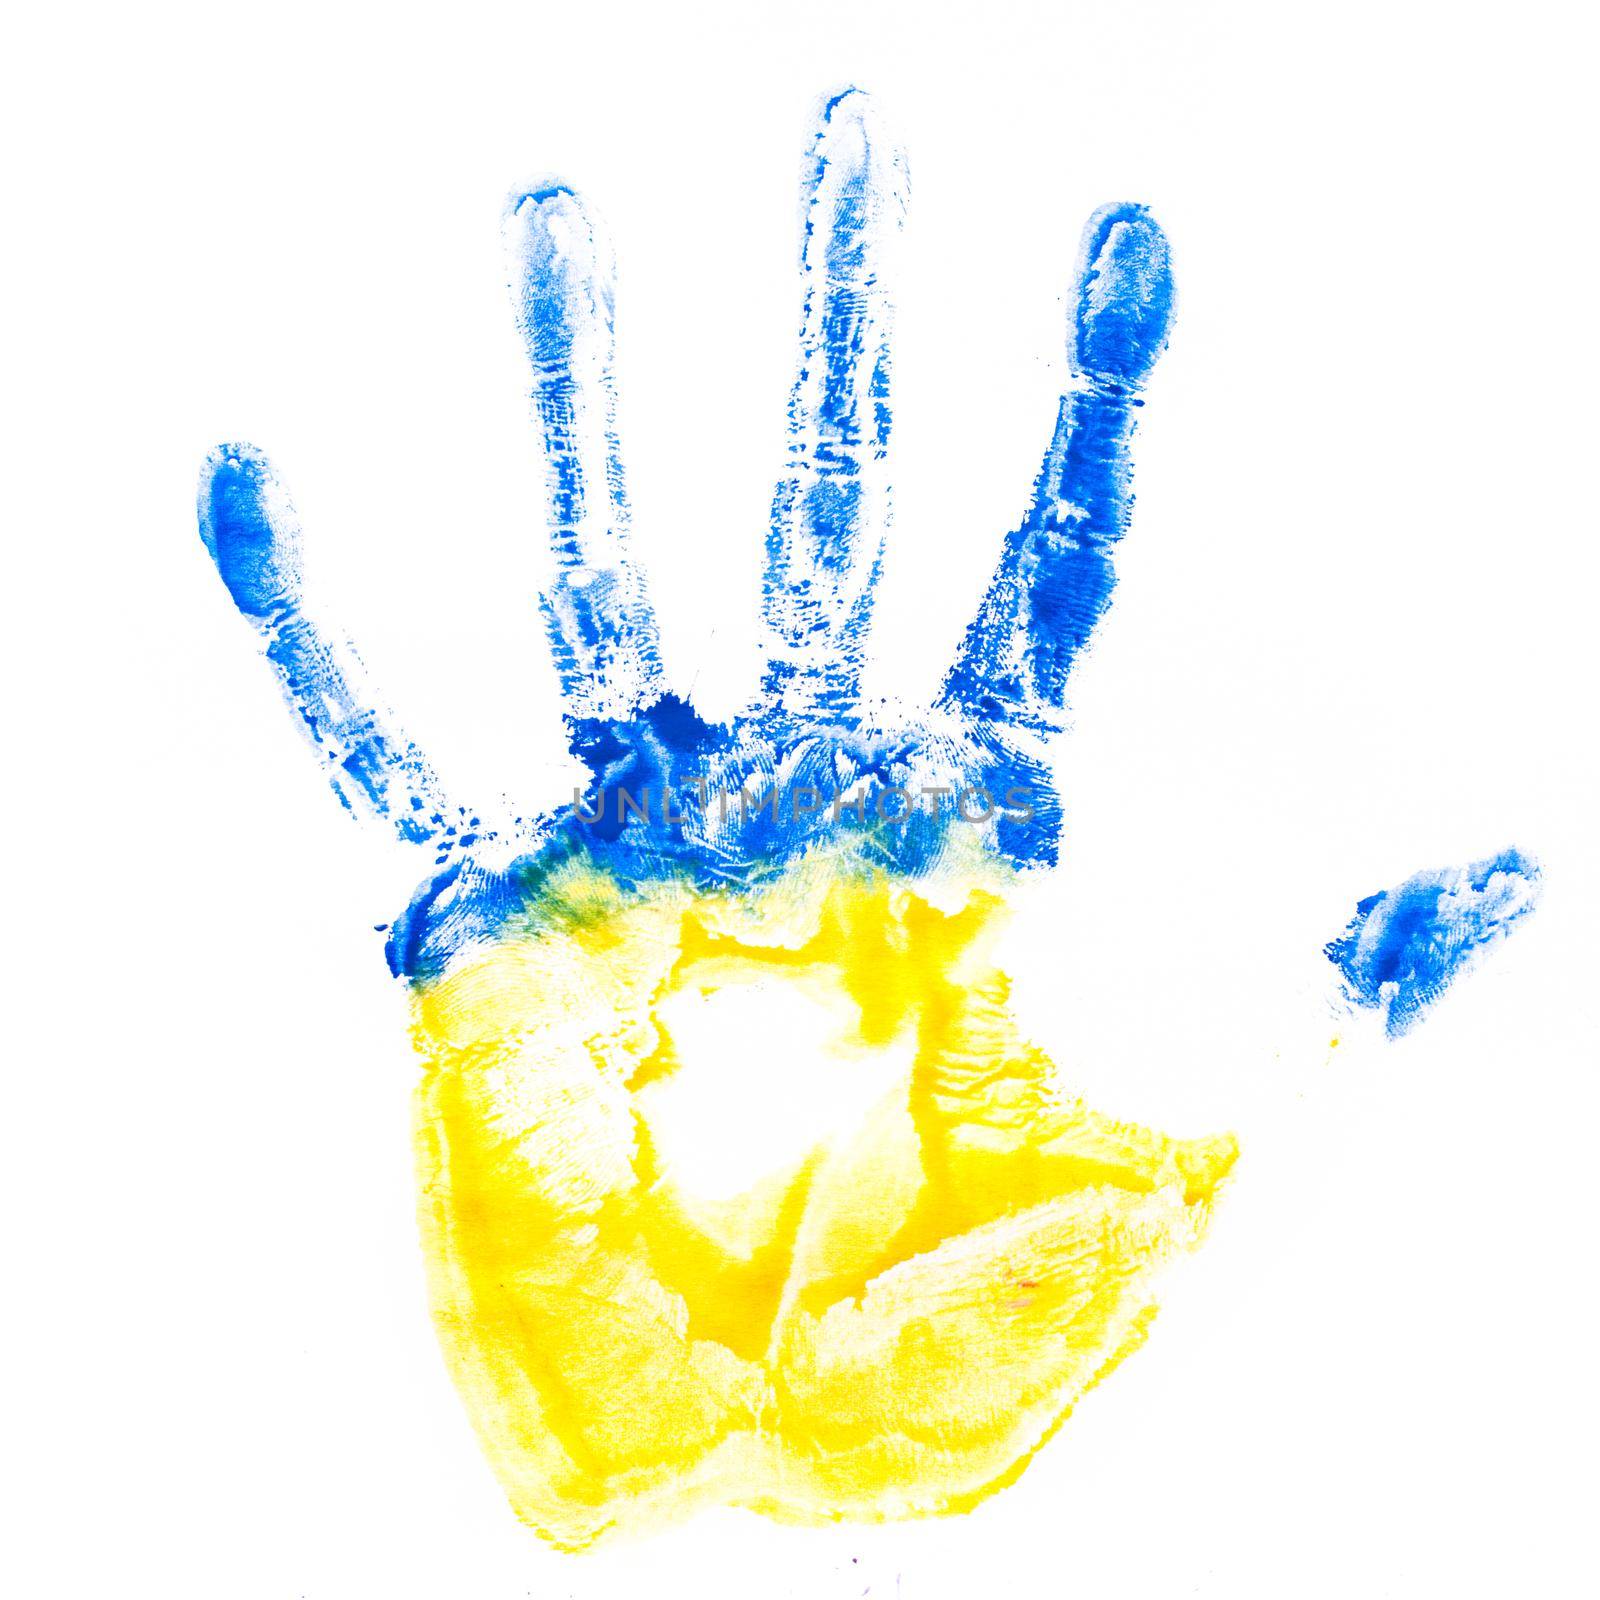 Child's hand imprint in Ukraine colours by oksix